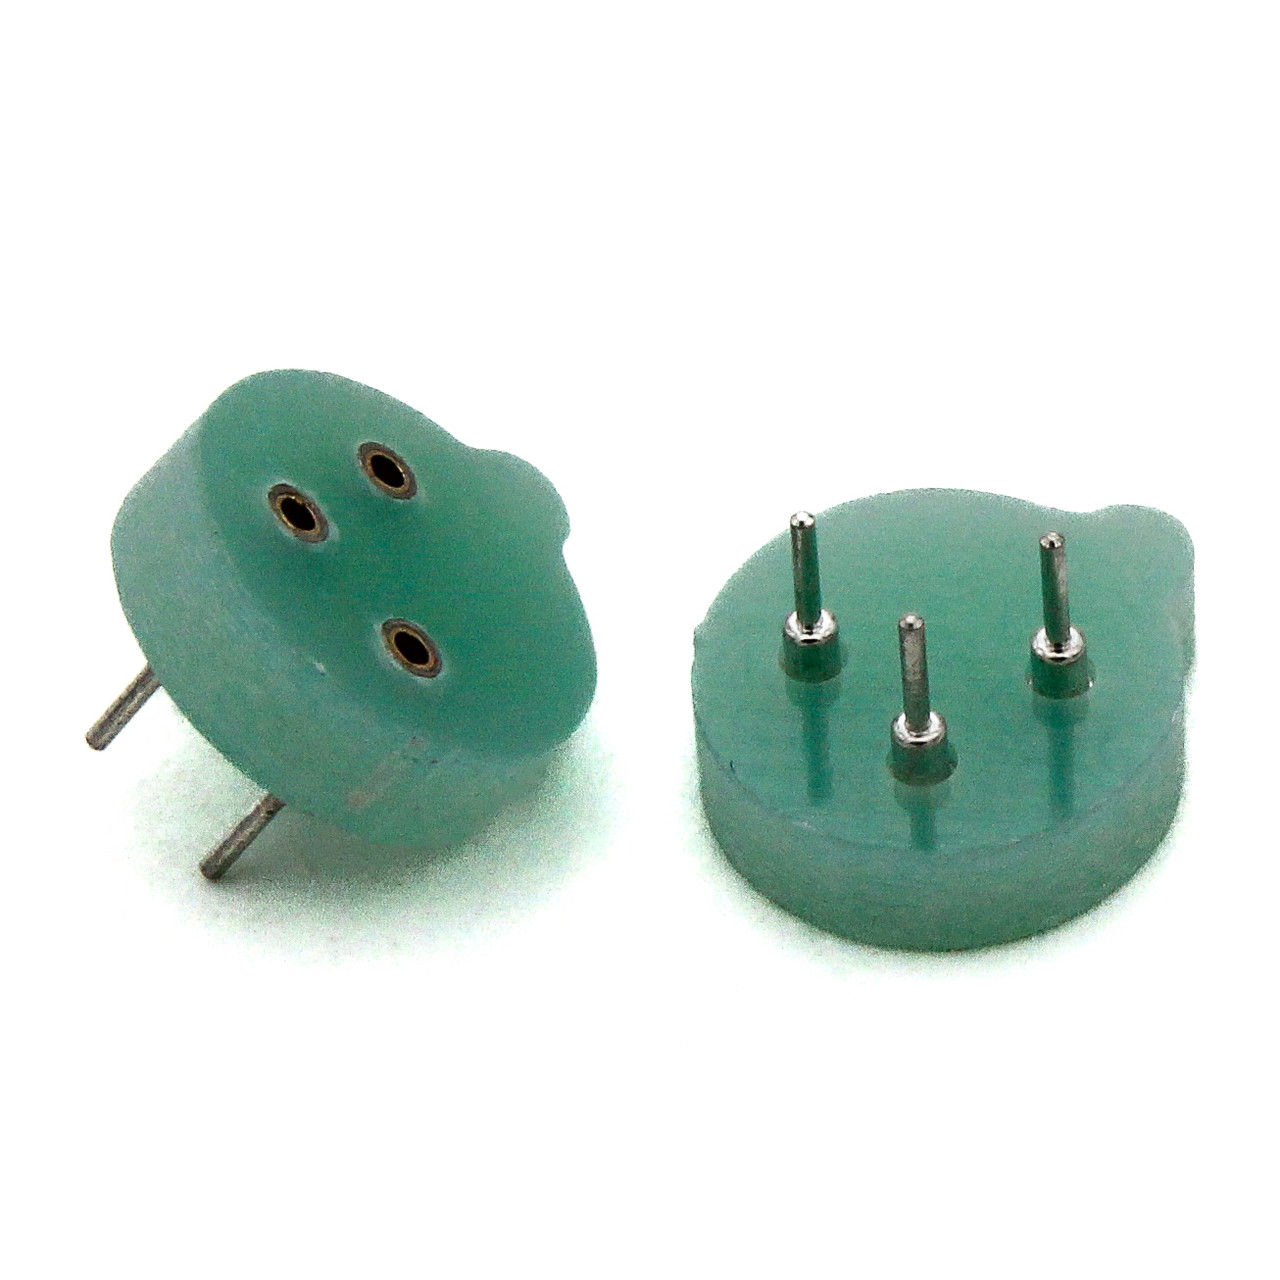 TO5 Transistor Socket - 3 Pin